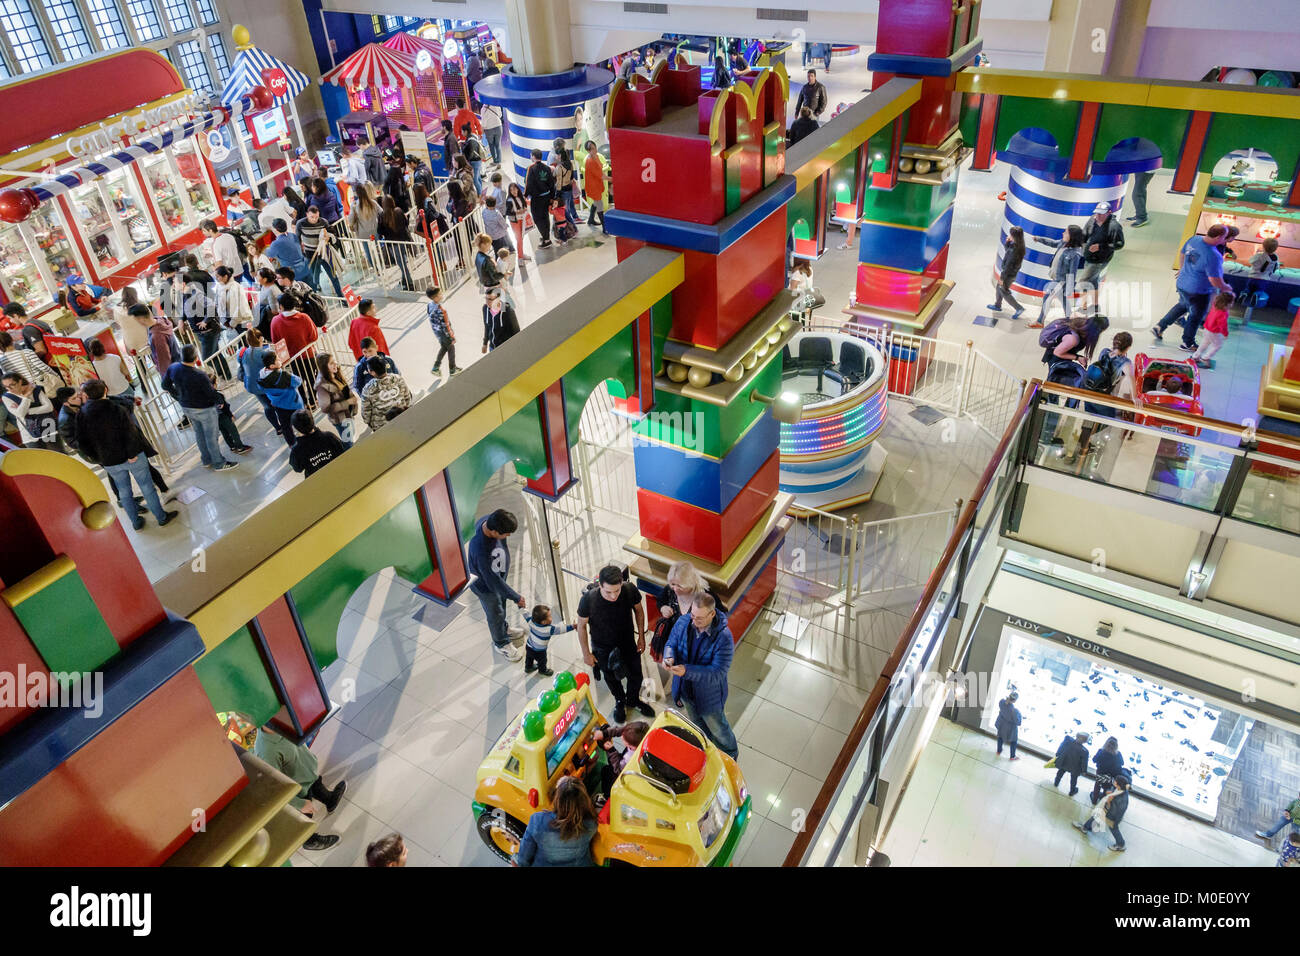 Buenos Aires Argentina,Abasto Shopping Mall,atrium,amusement arcade,rides,games,families,crowded,Hispanic ARG171122060 Stock Photo